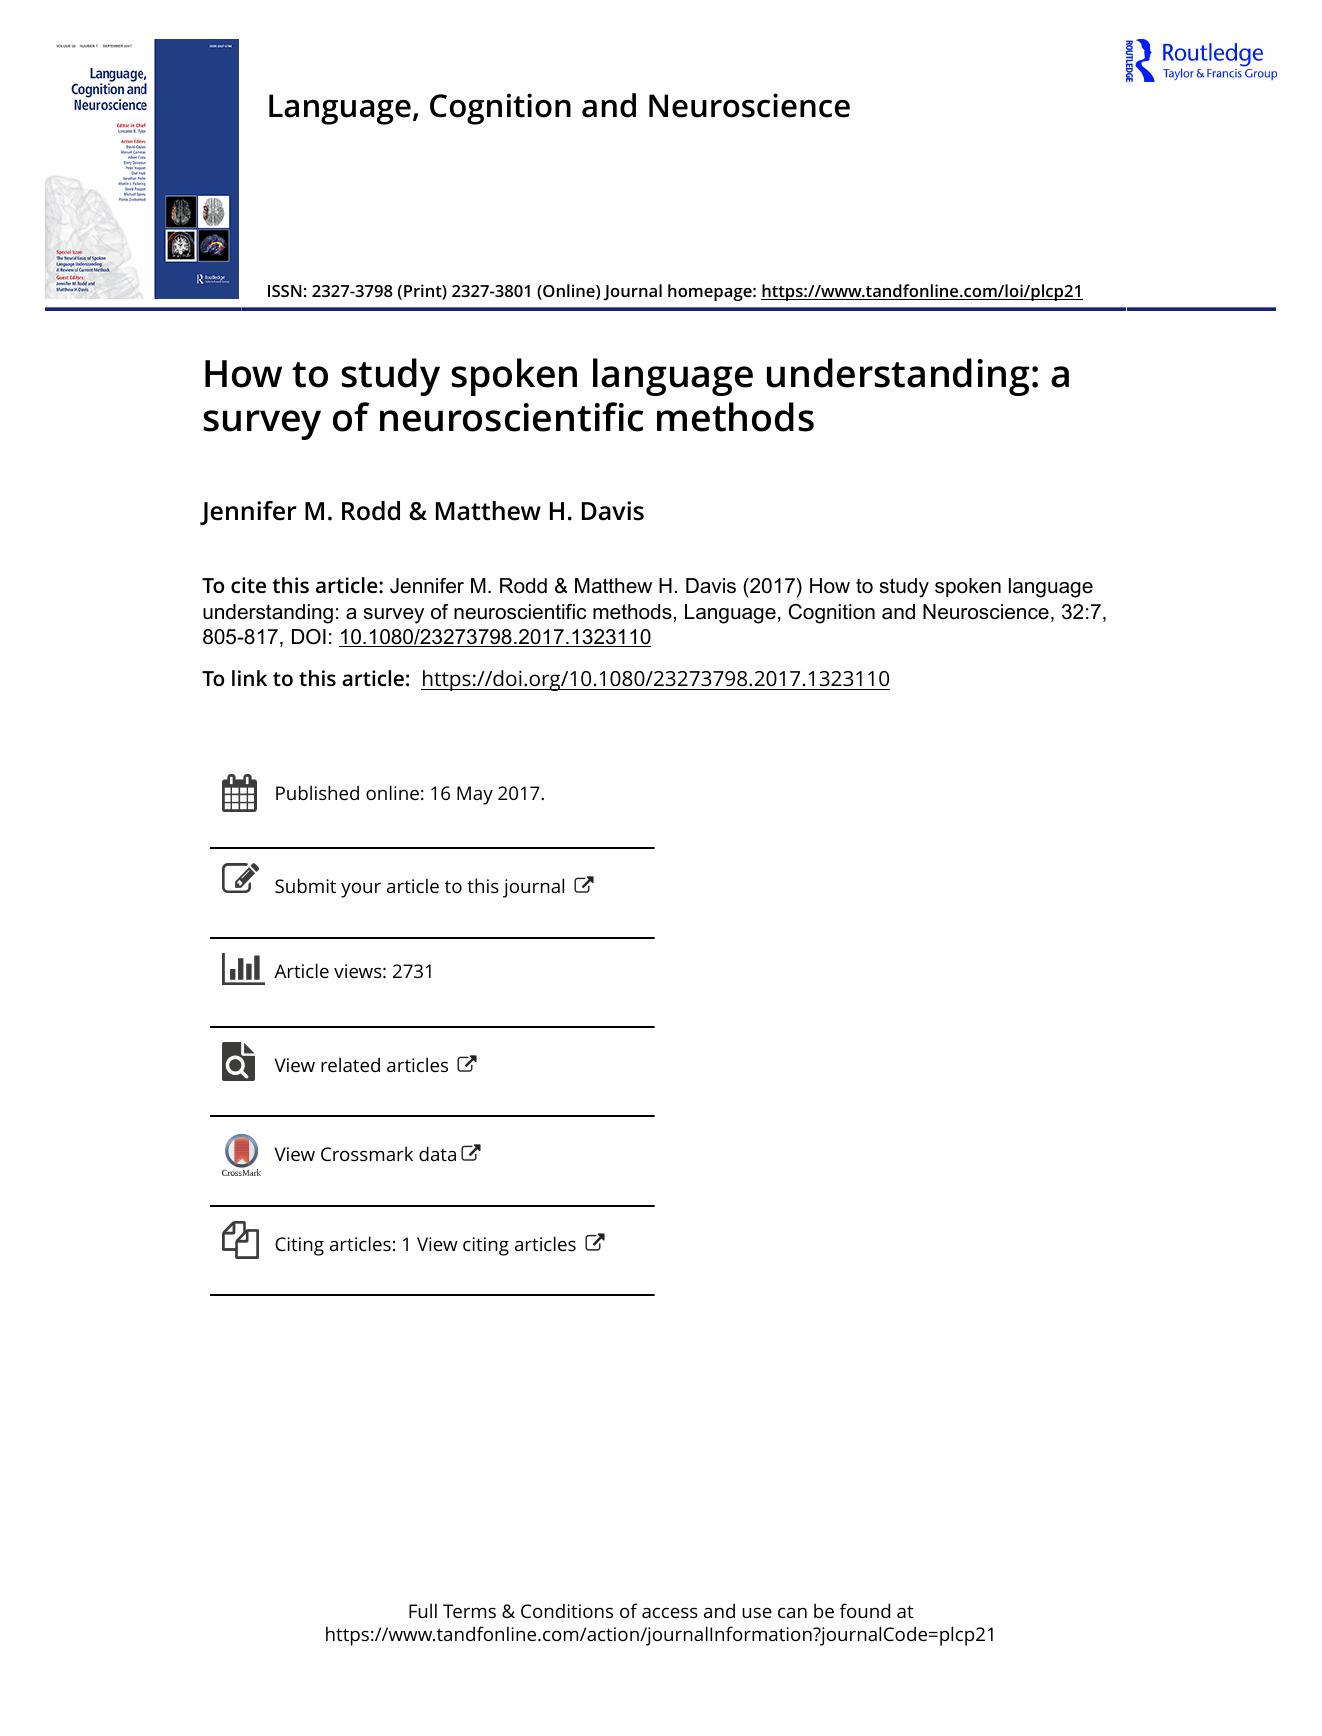 How to study spoken language understanding: a survey of neuroscientific methods